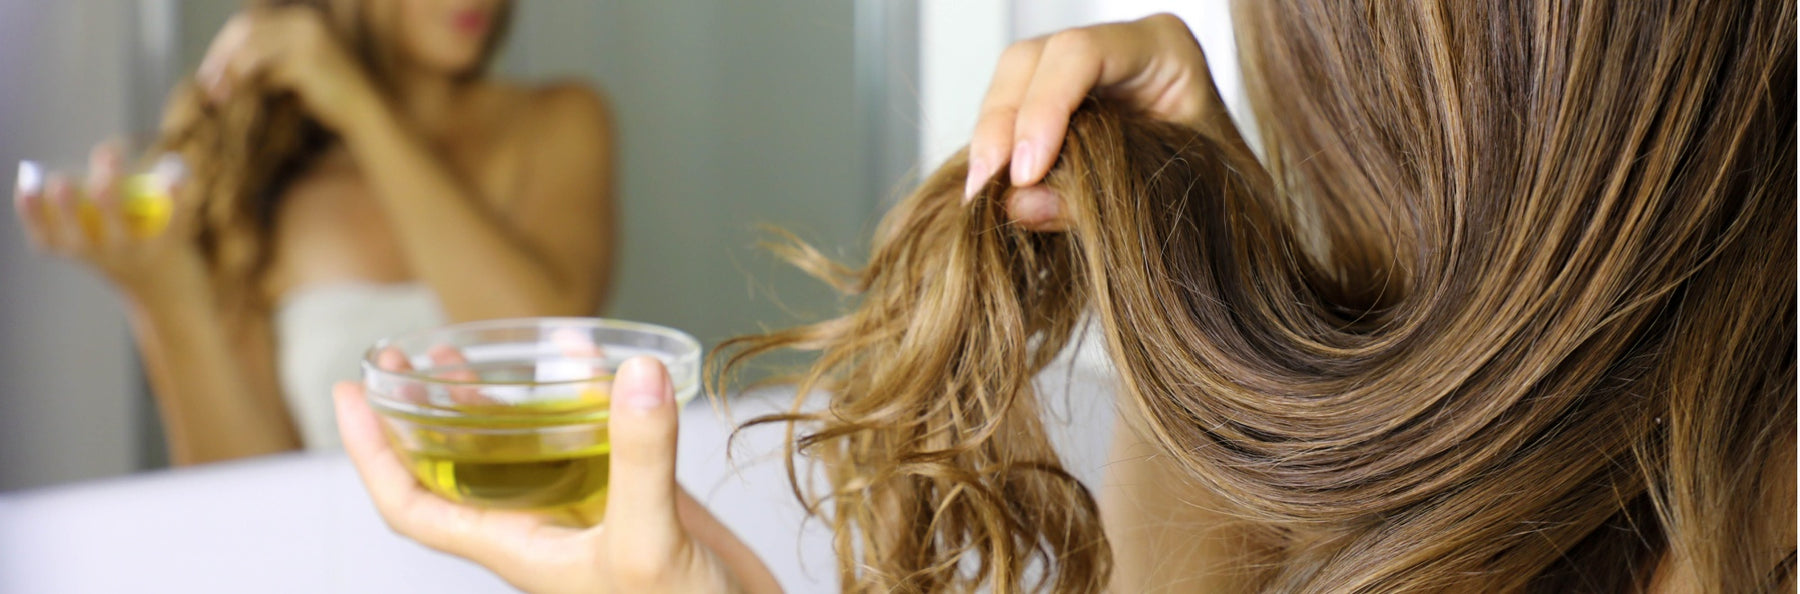 woman applying tamanu oil to hair in front of bathroom mirror in towel